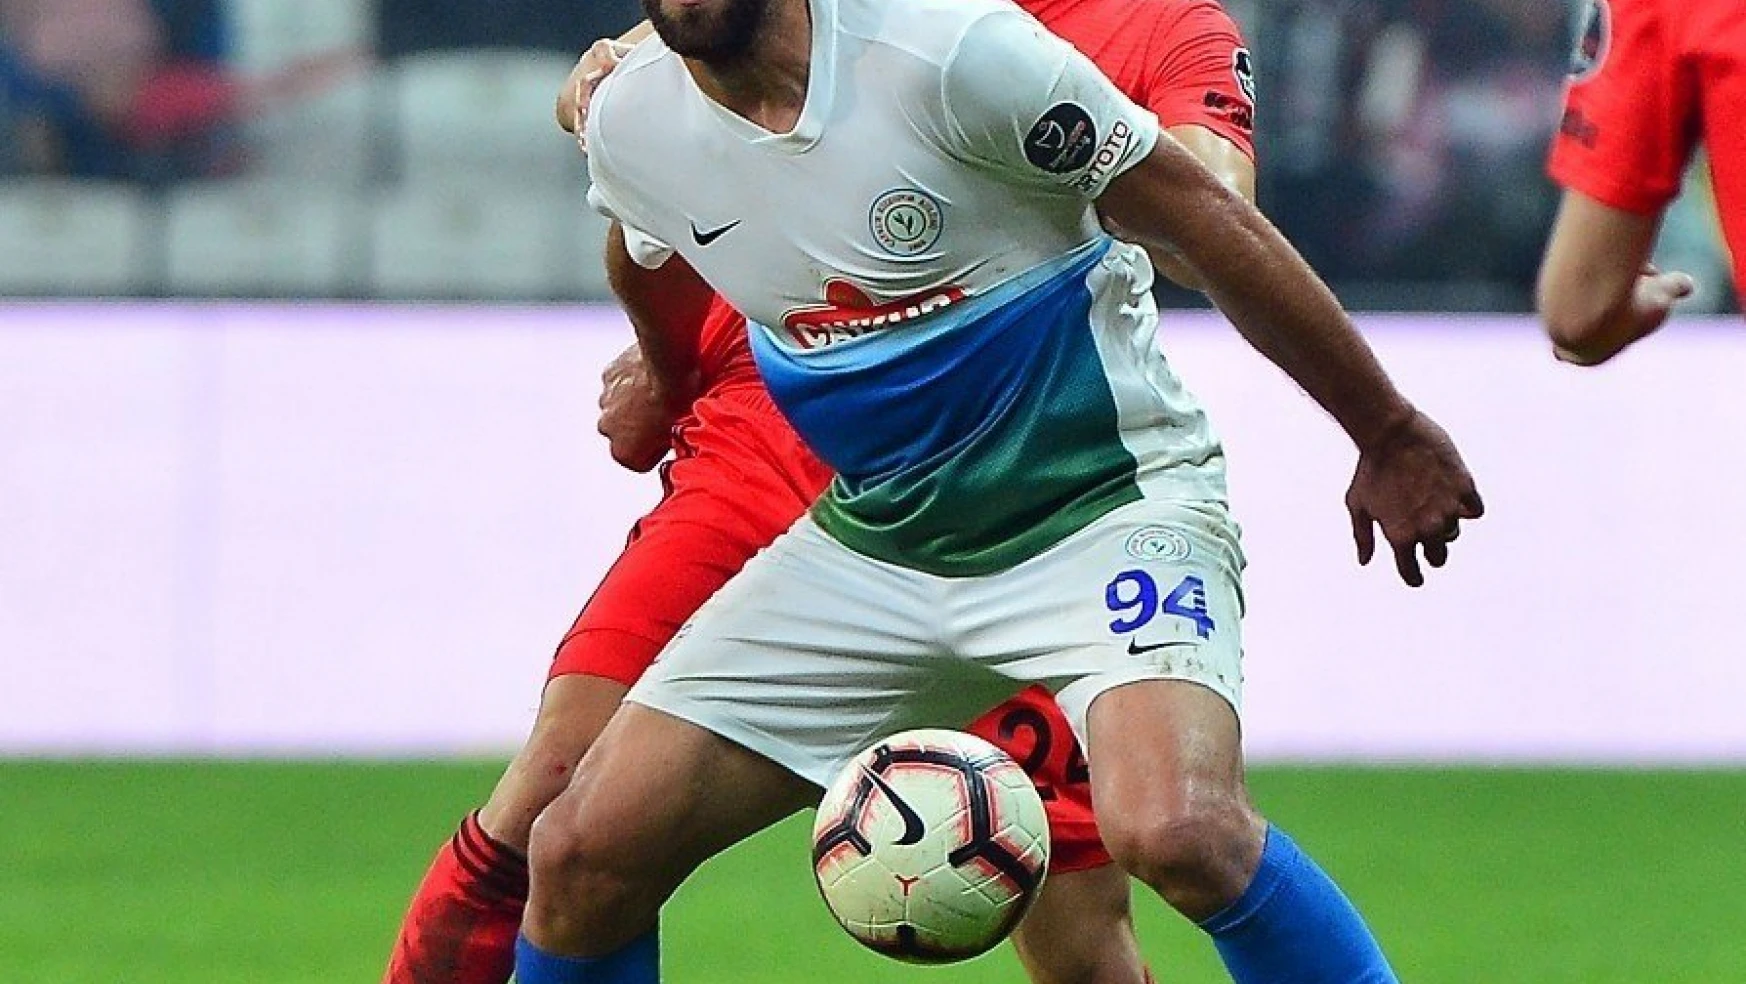 Süper Lig'de 9 maçta 21 gol